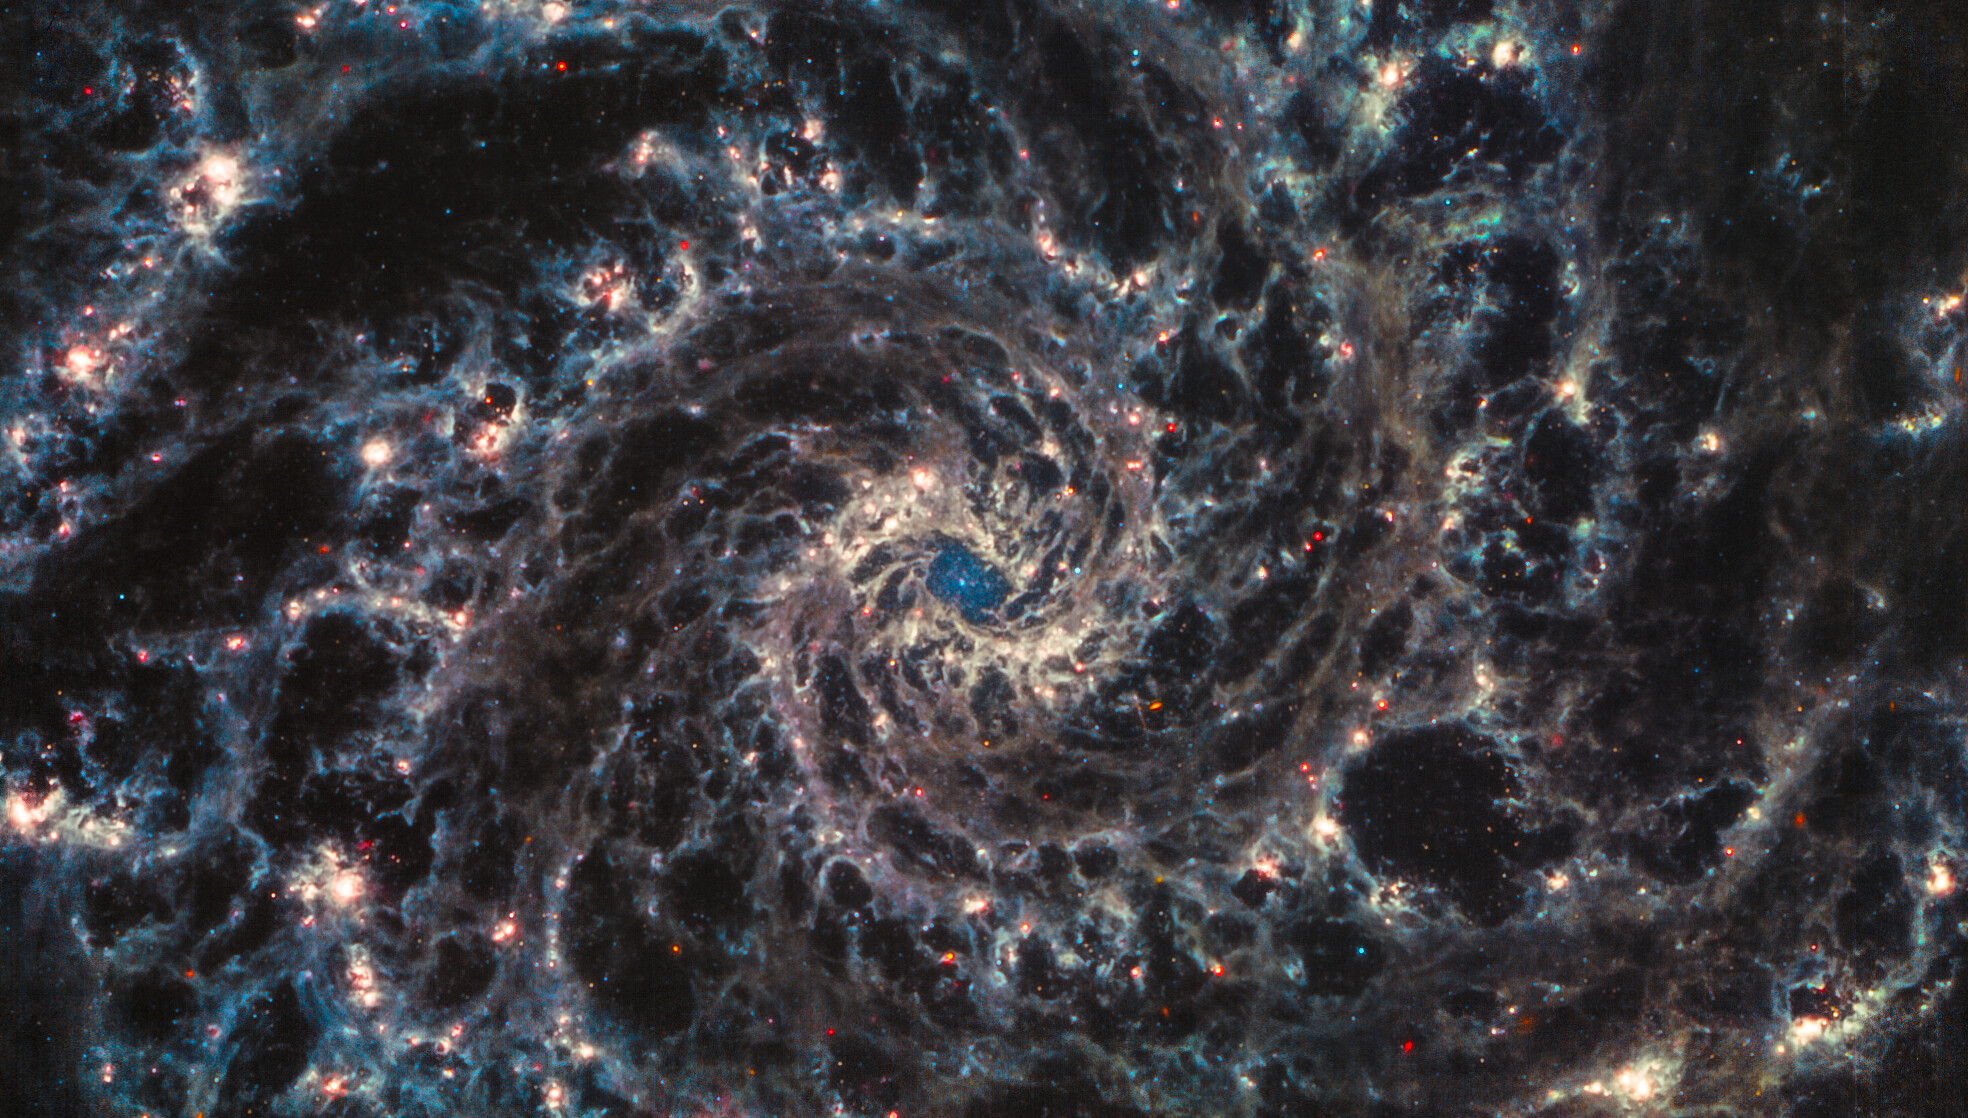 A swirling galaxy